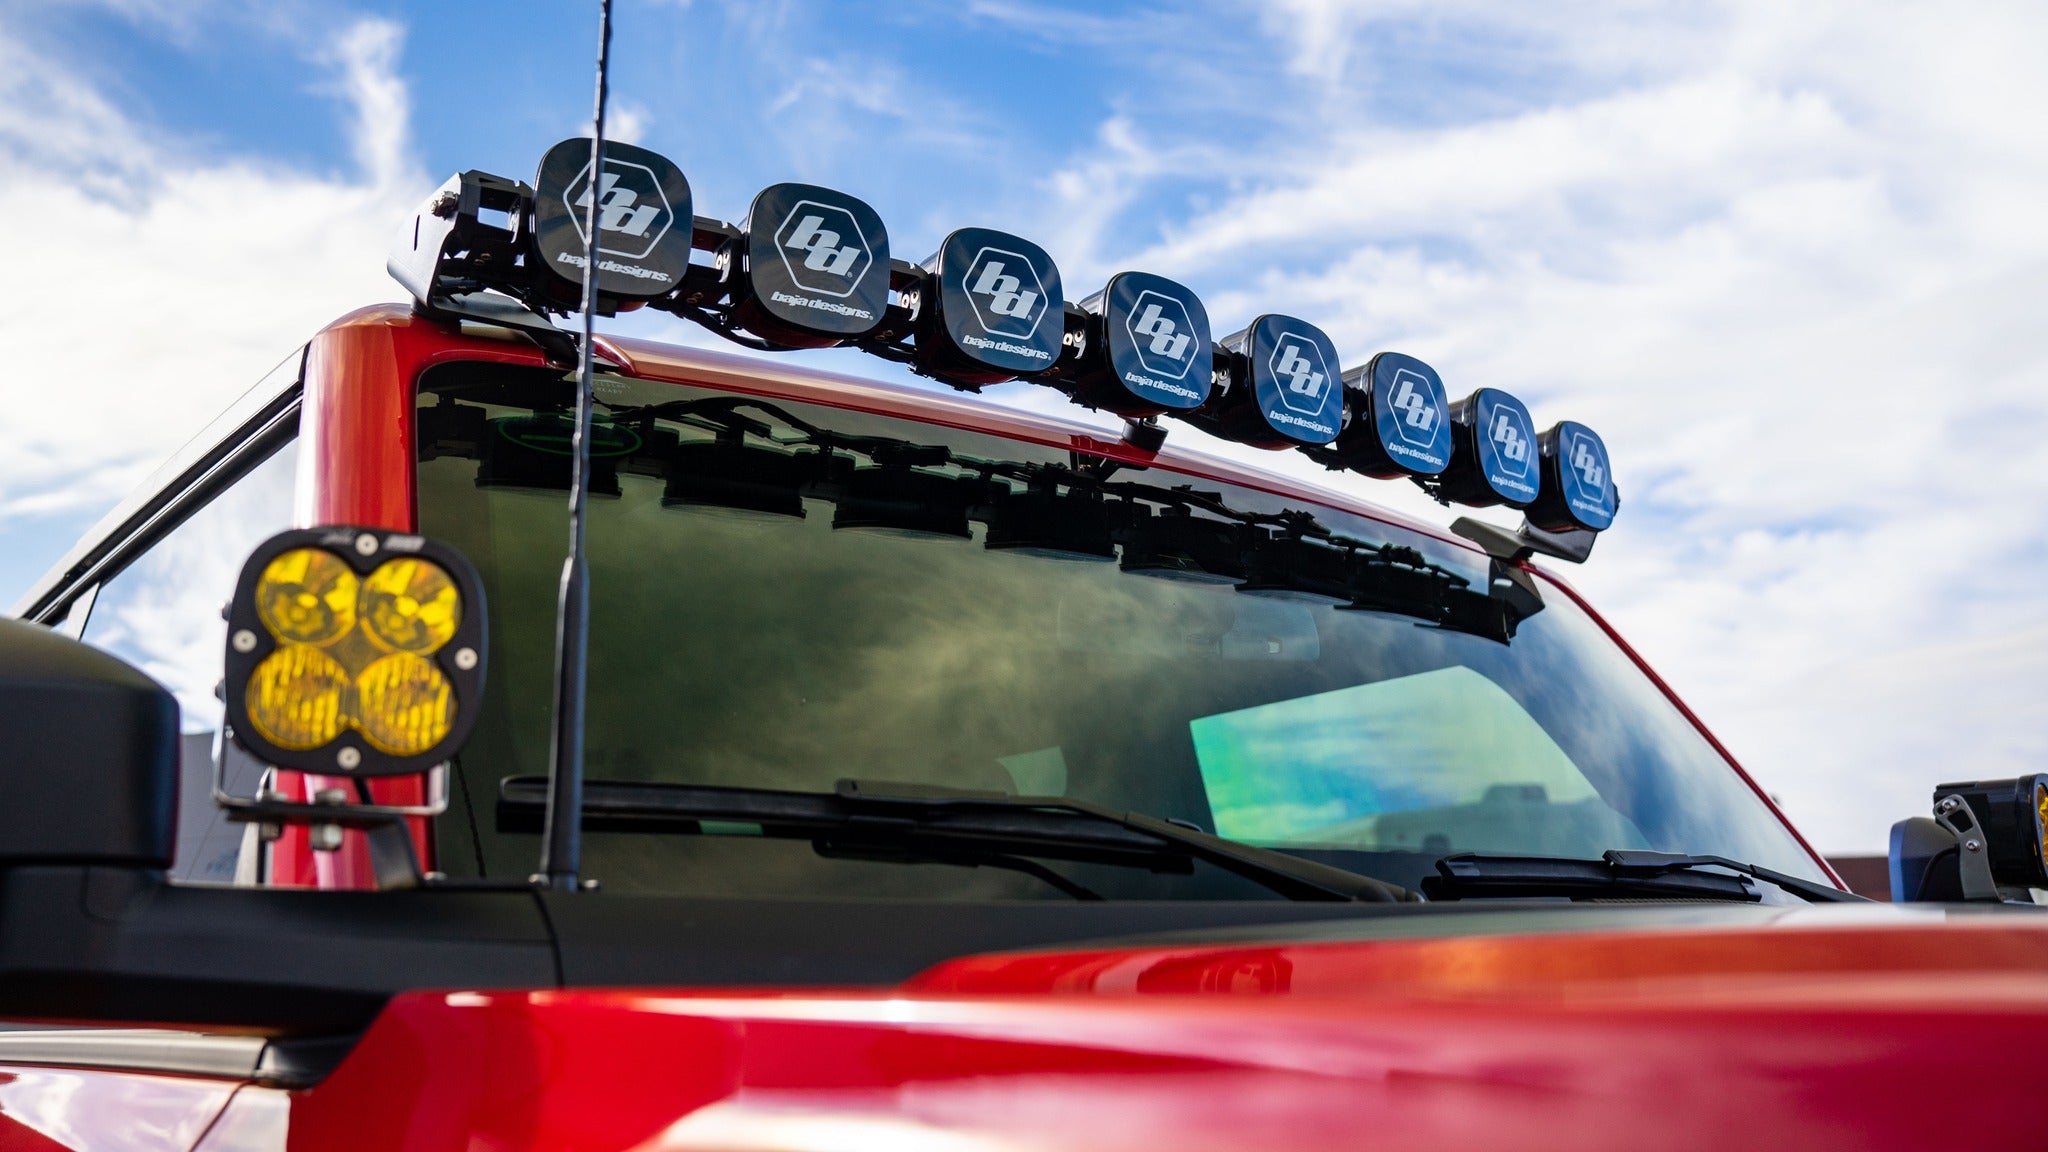 '21-23 Ford Bronco Baja Designs 8 XL Linkable Roof Bar Kit Lighting Baja Designs display